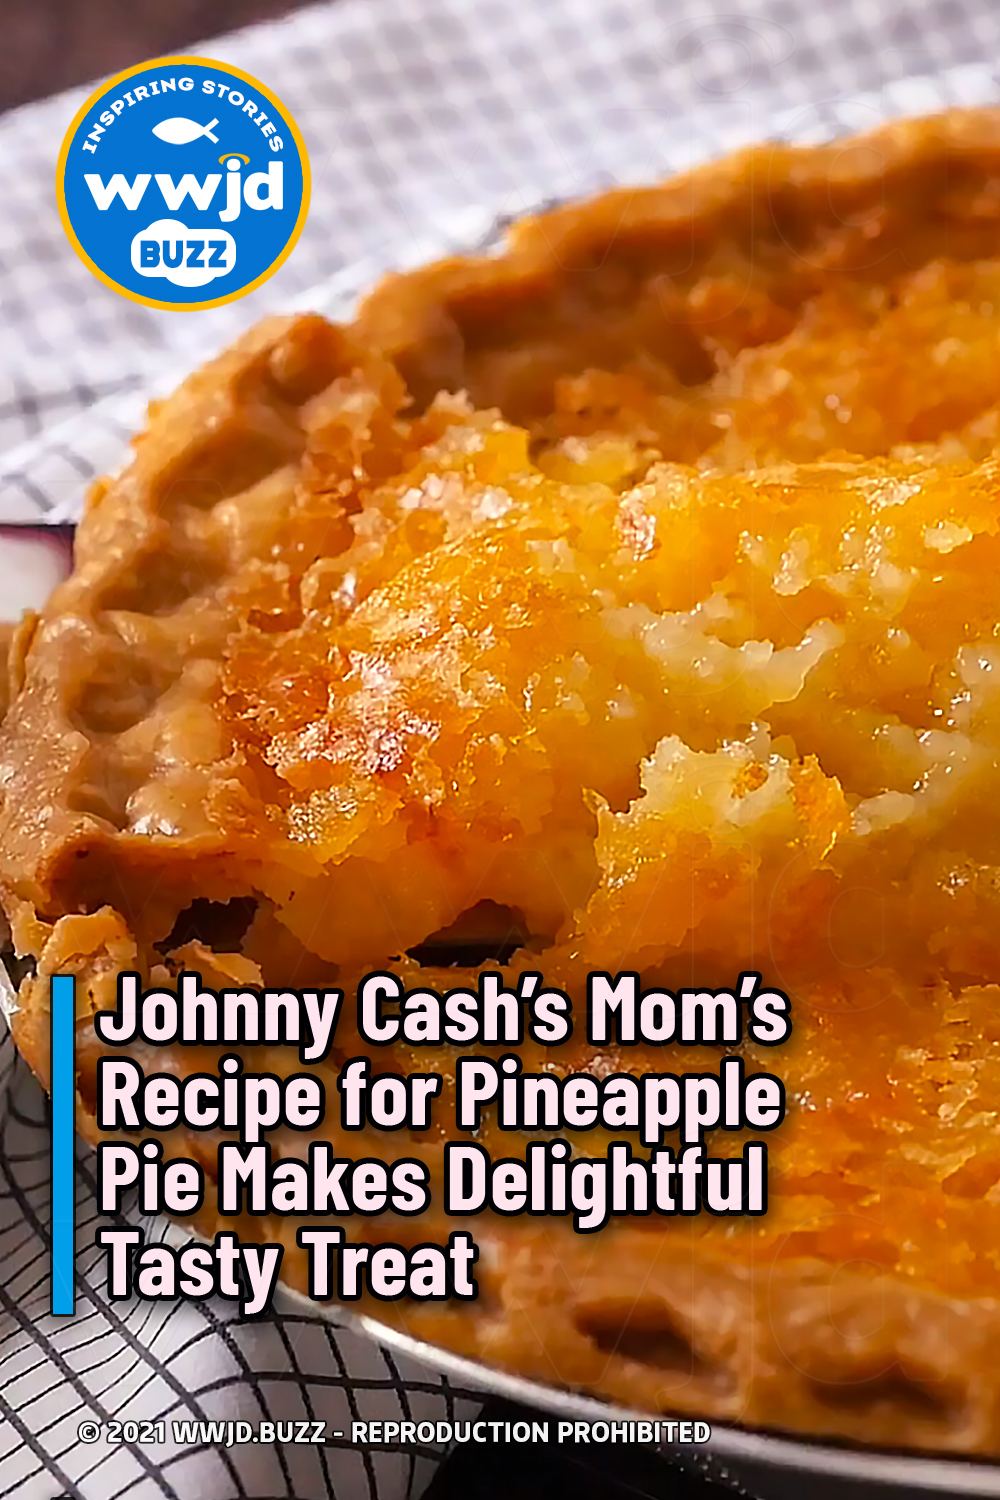 Johnny Cash’s Mom’s Recipe for Pineapple Pie Makes Delightful Tasty Treat